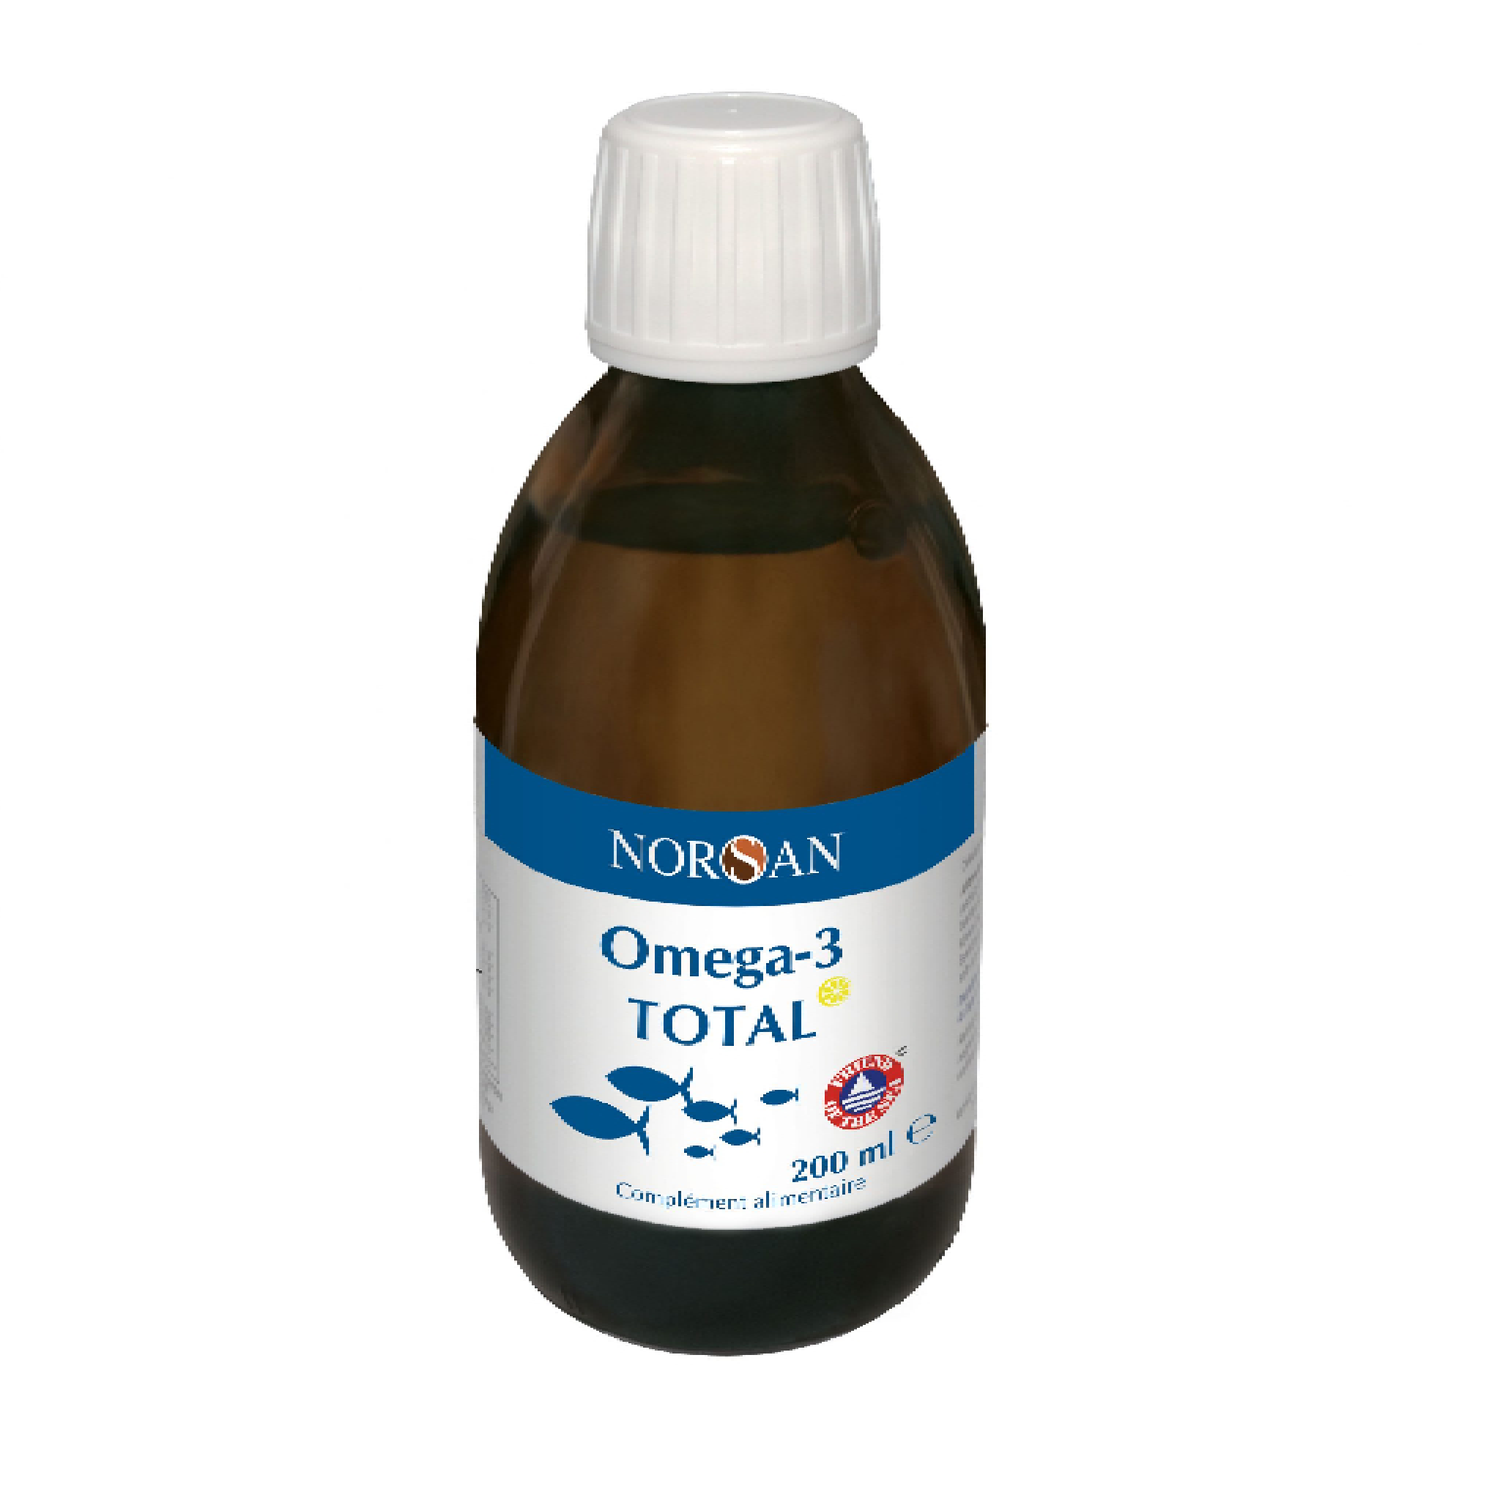 Omega-3 Total